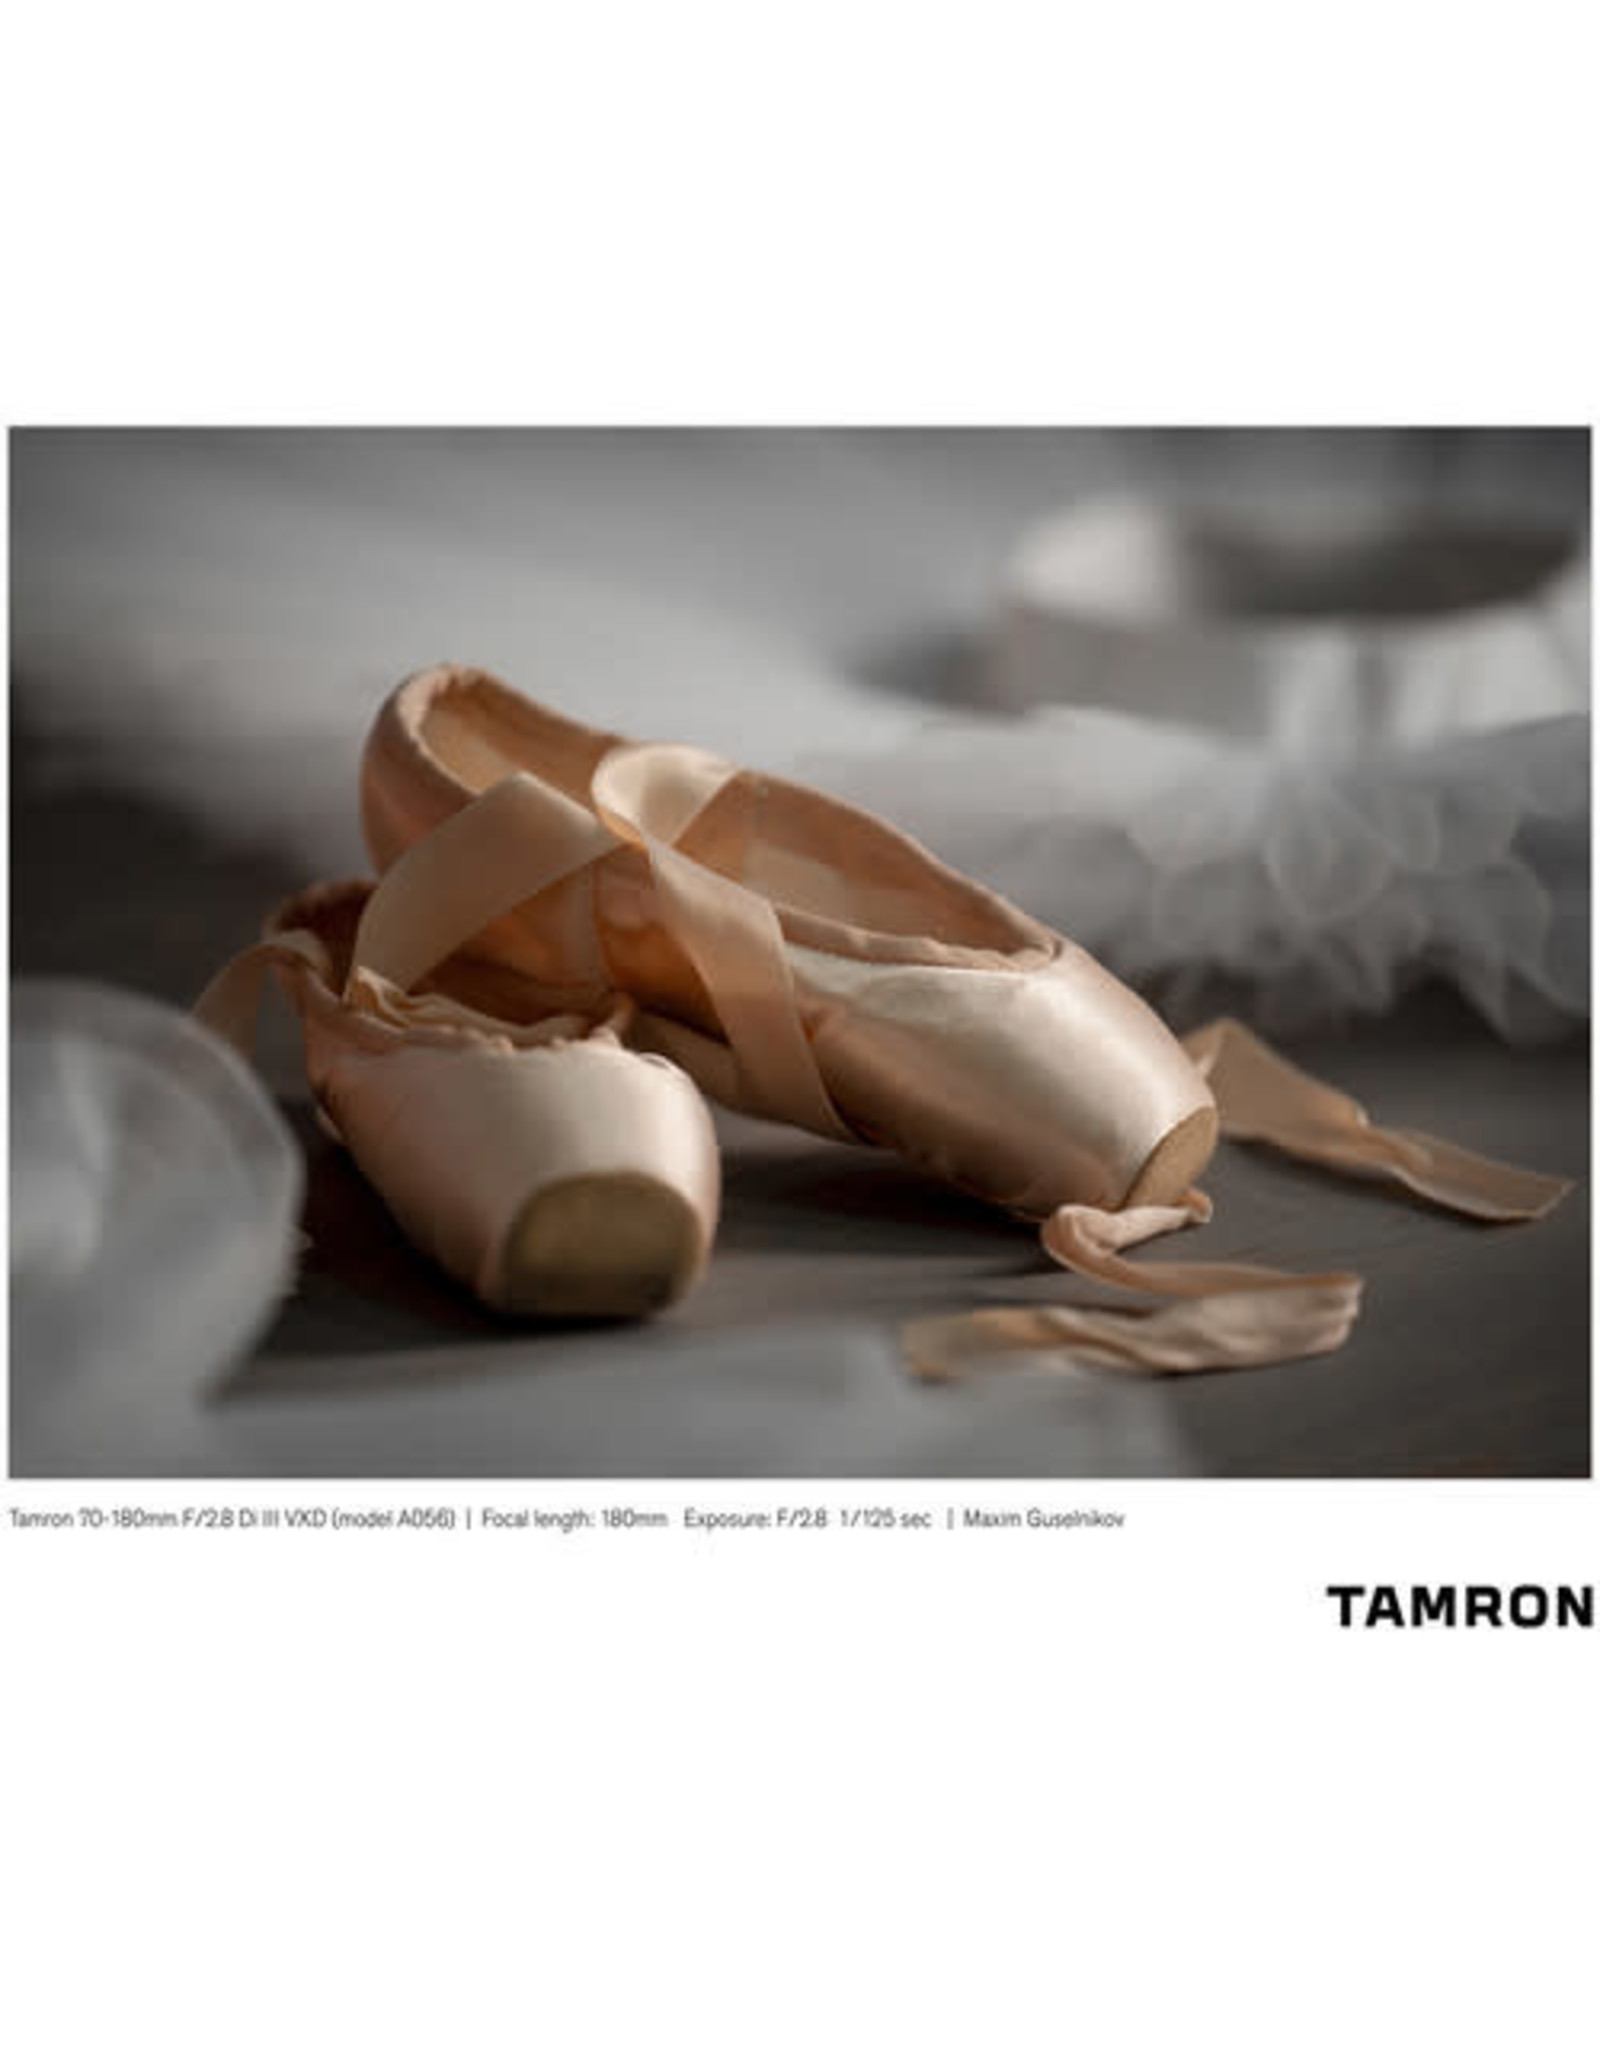 Tamron Tamron 70-180mm f/2.8 Di III VXD Lens for Sony FE